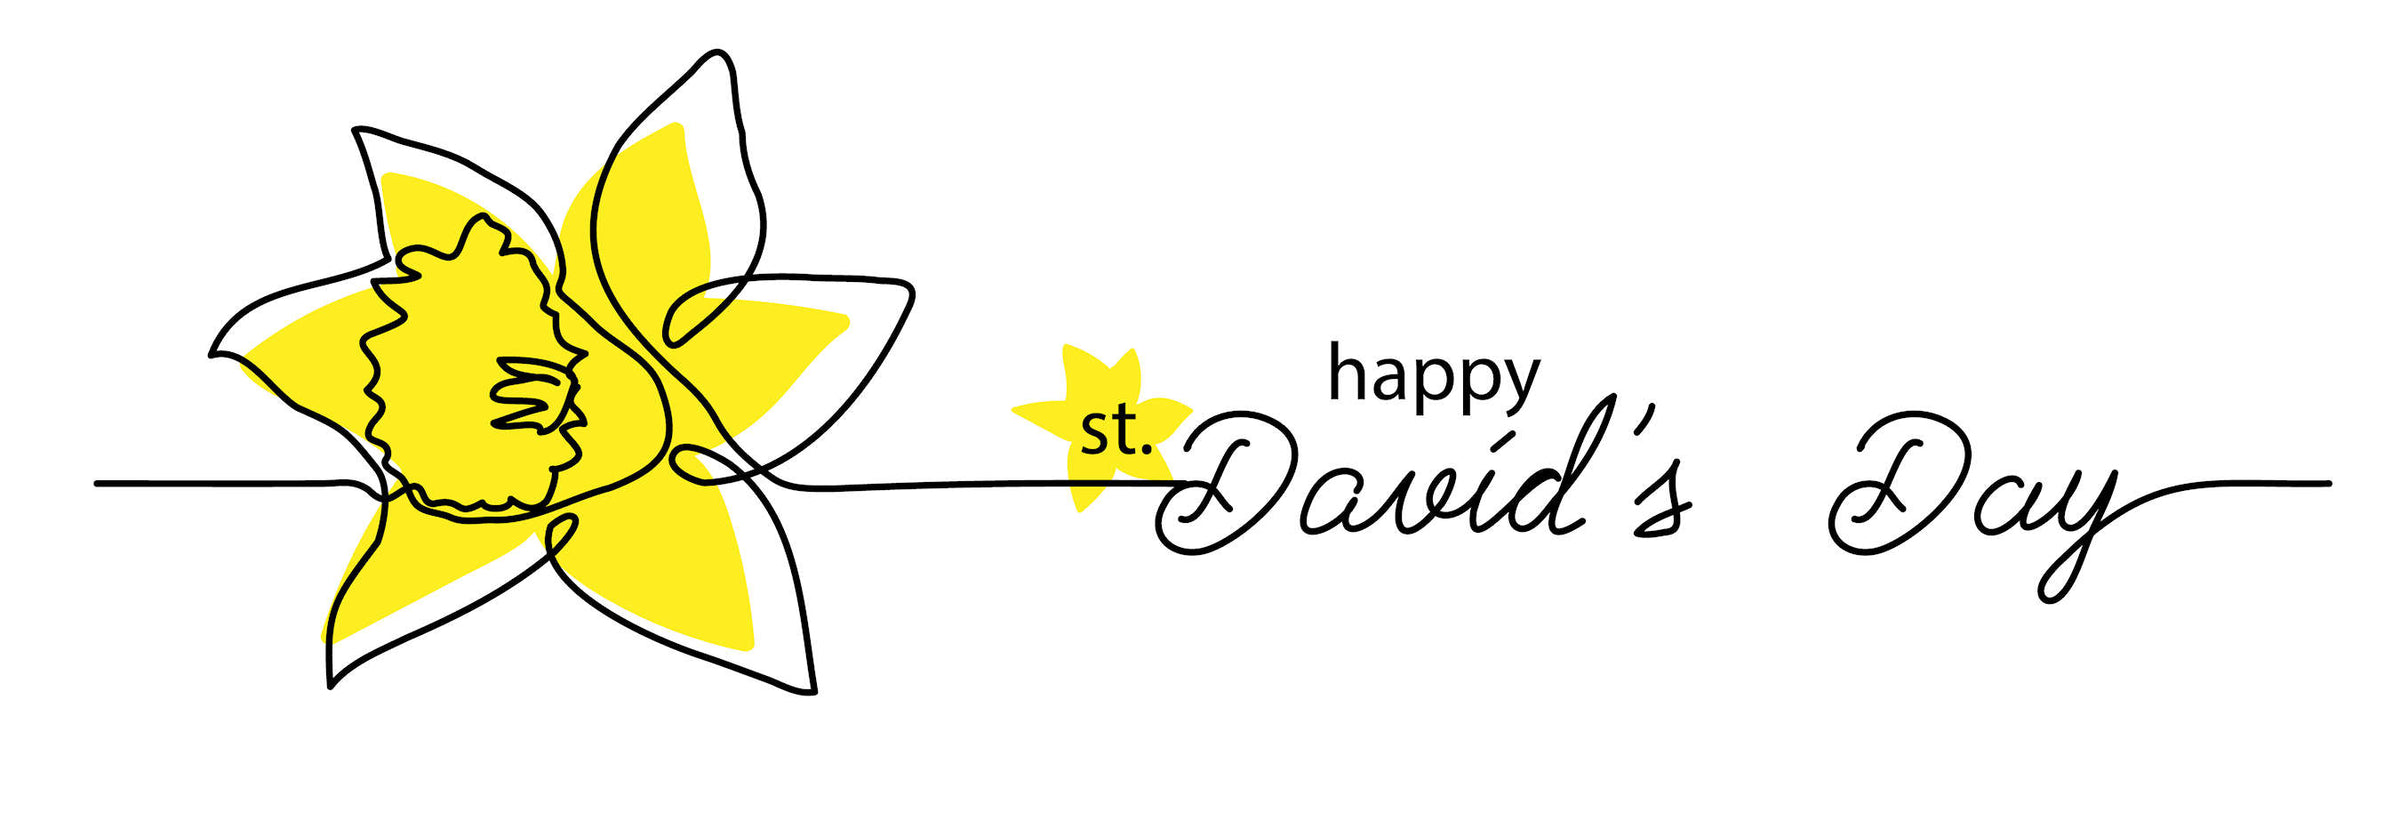 St David's Day